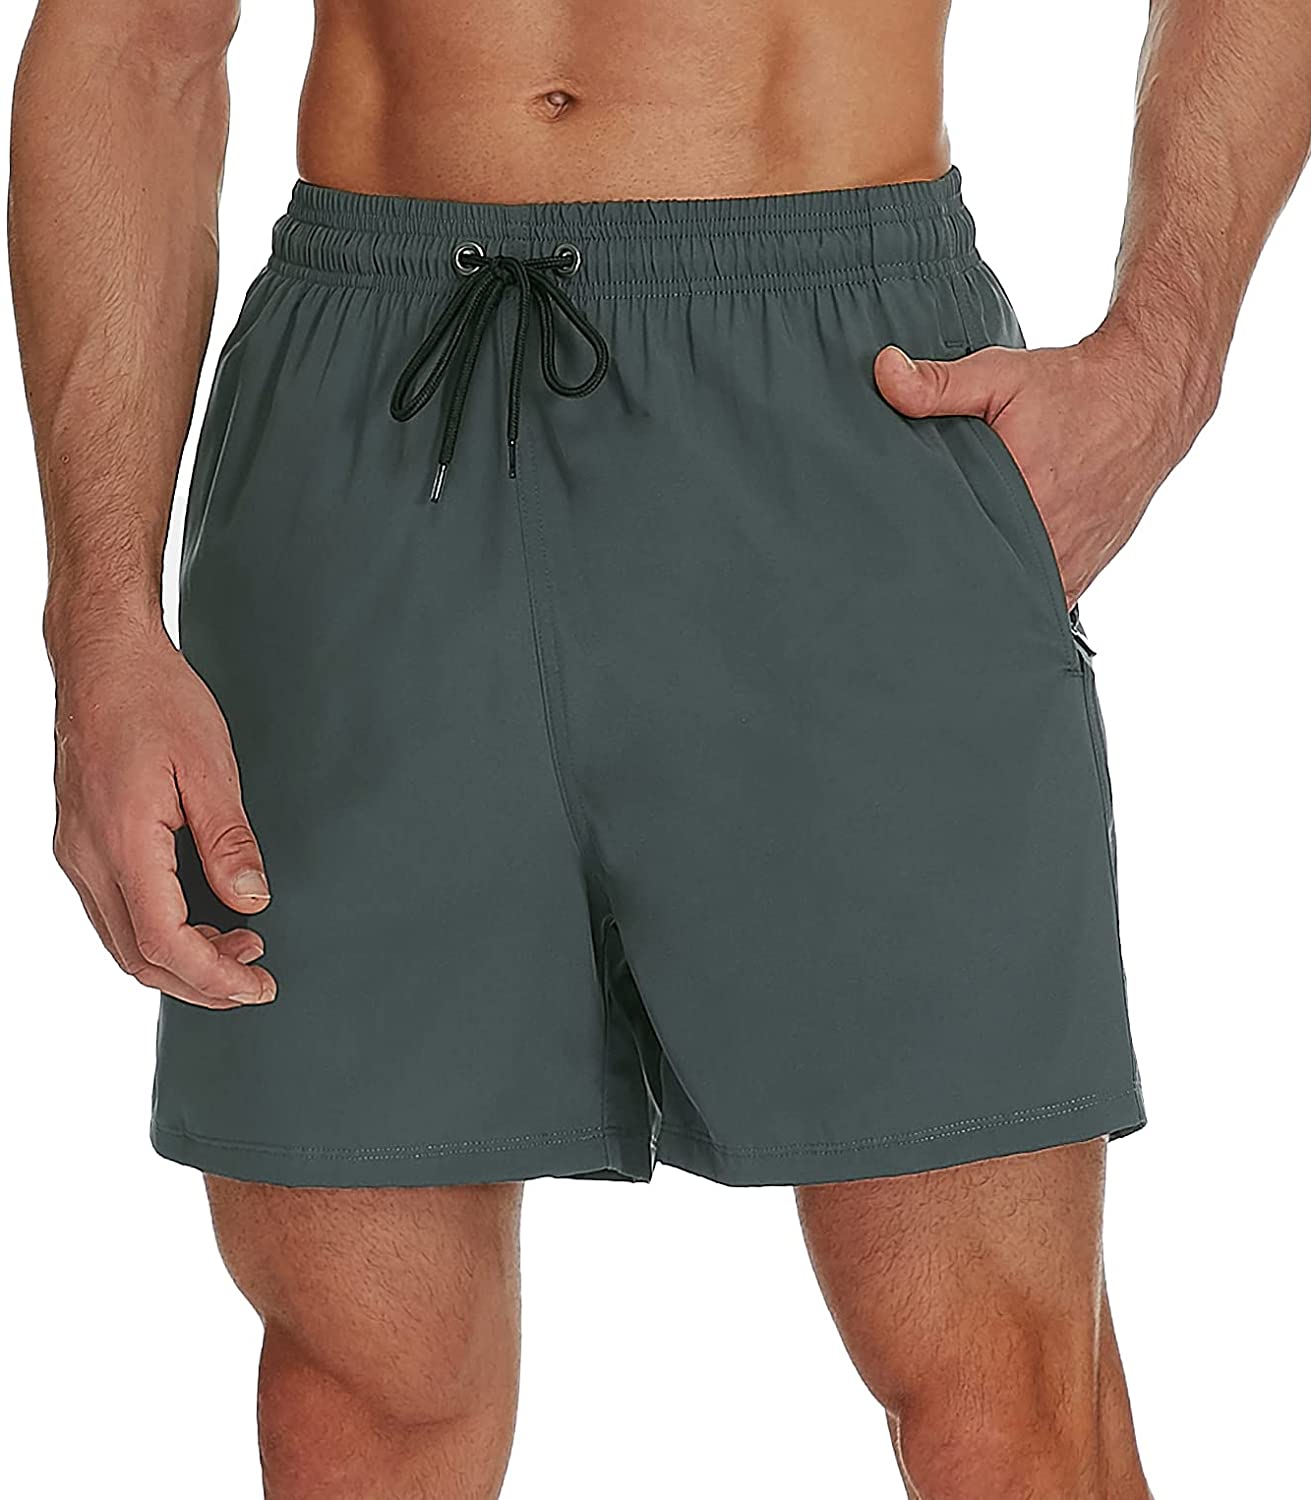 SILKWORLD Men's Swim Trunks with Zipper Pockets 5 Swimsuit Quick Dry Shorts 